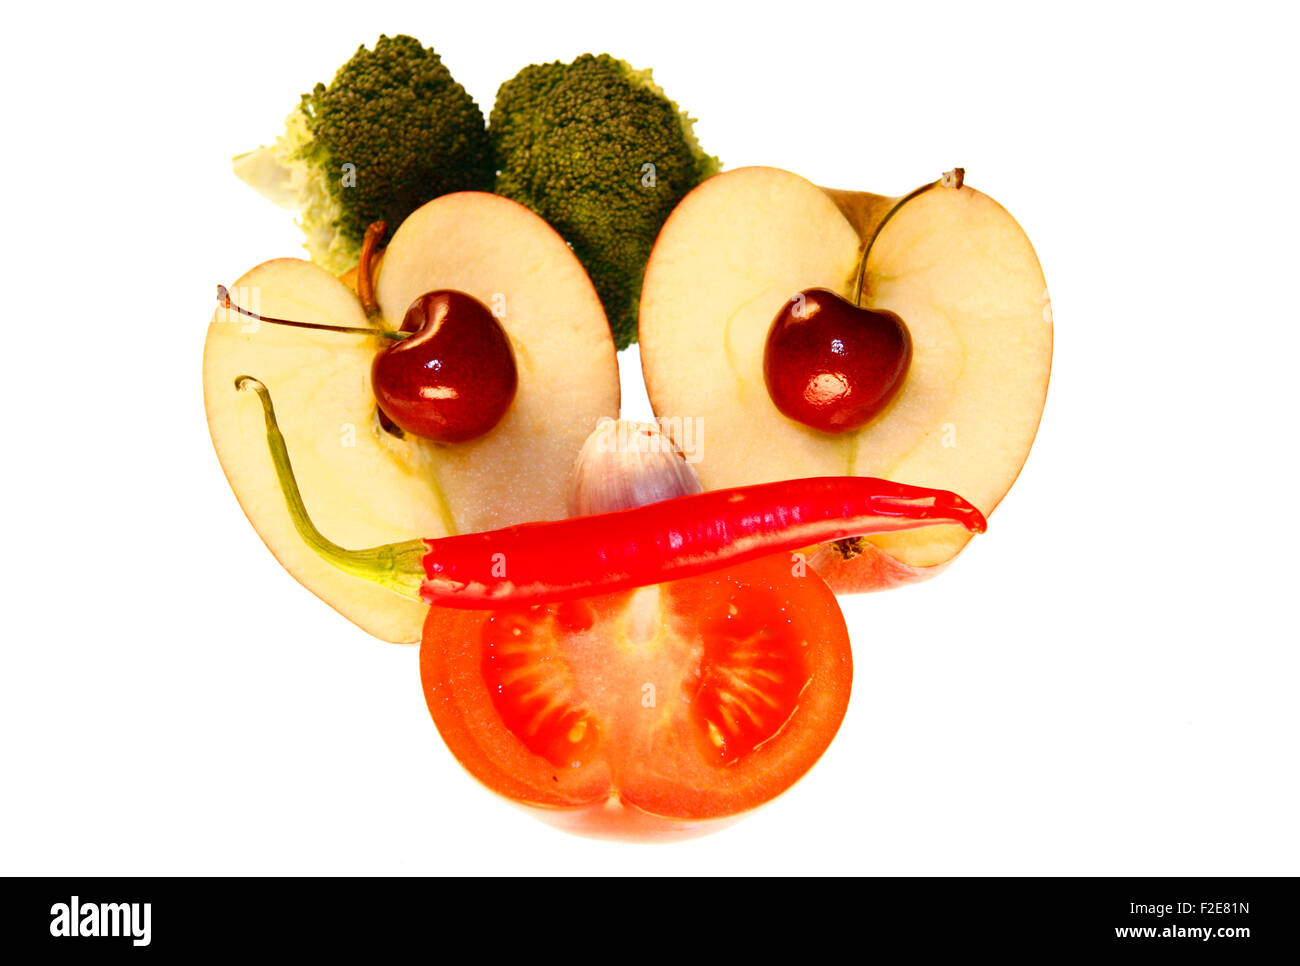 Gesicht/ face: Brokkoli, Kirschen, Apfel, Tomate, Chilly - Symbolbild Nahrungsmittel. Stock Photo